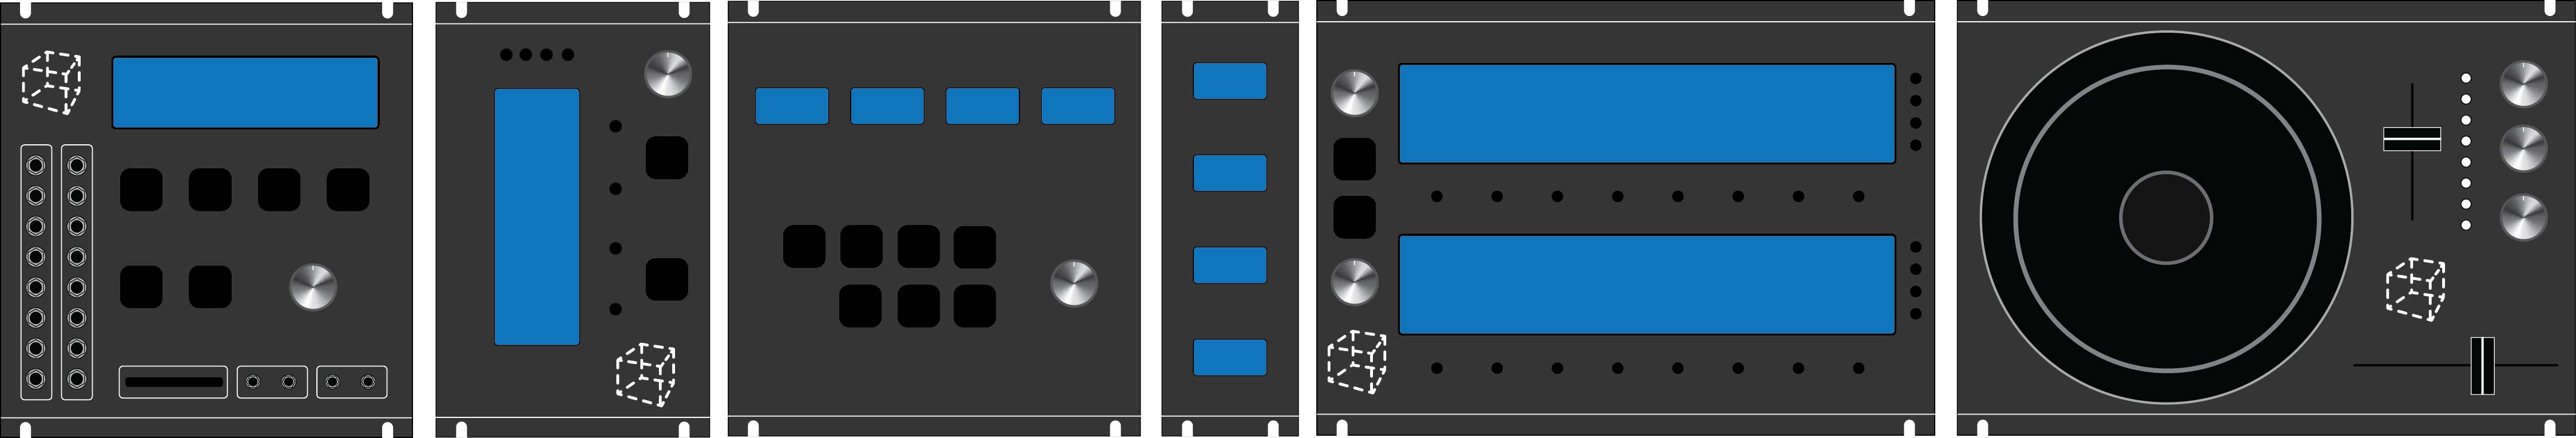 neonking:modulbox-panels3.jpg